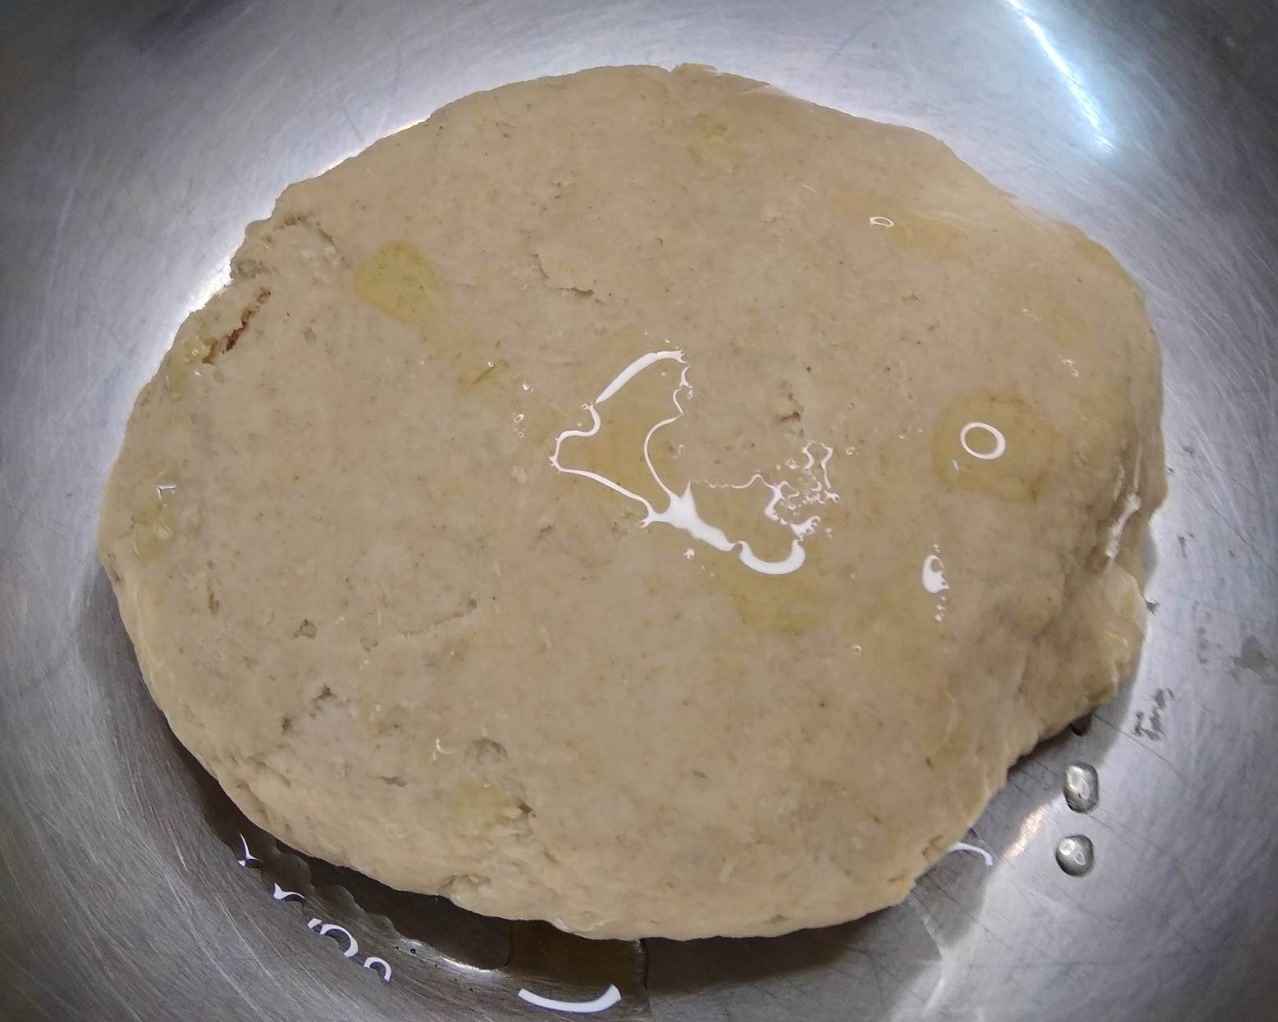 How to Make the Dough